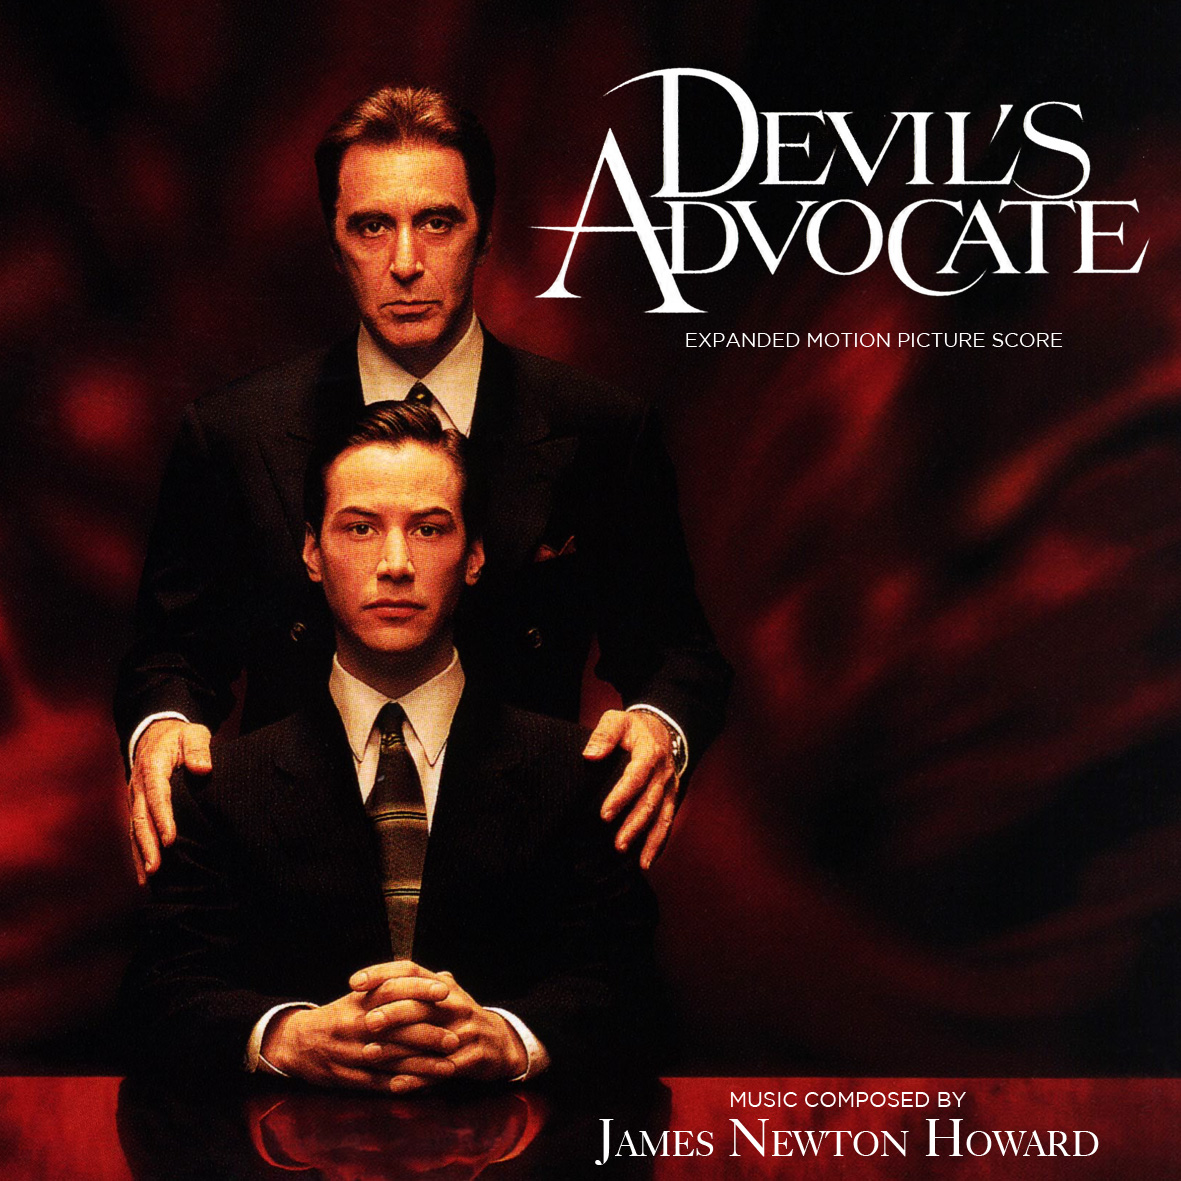 devil's advocate movie review